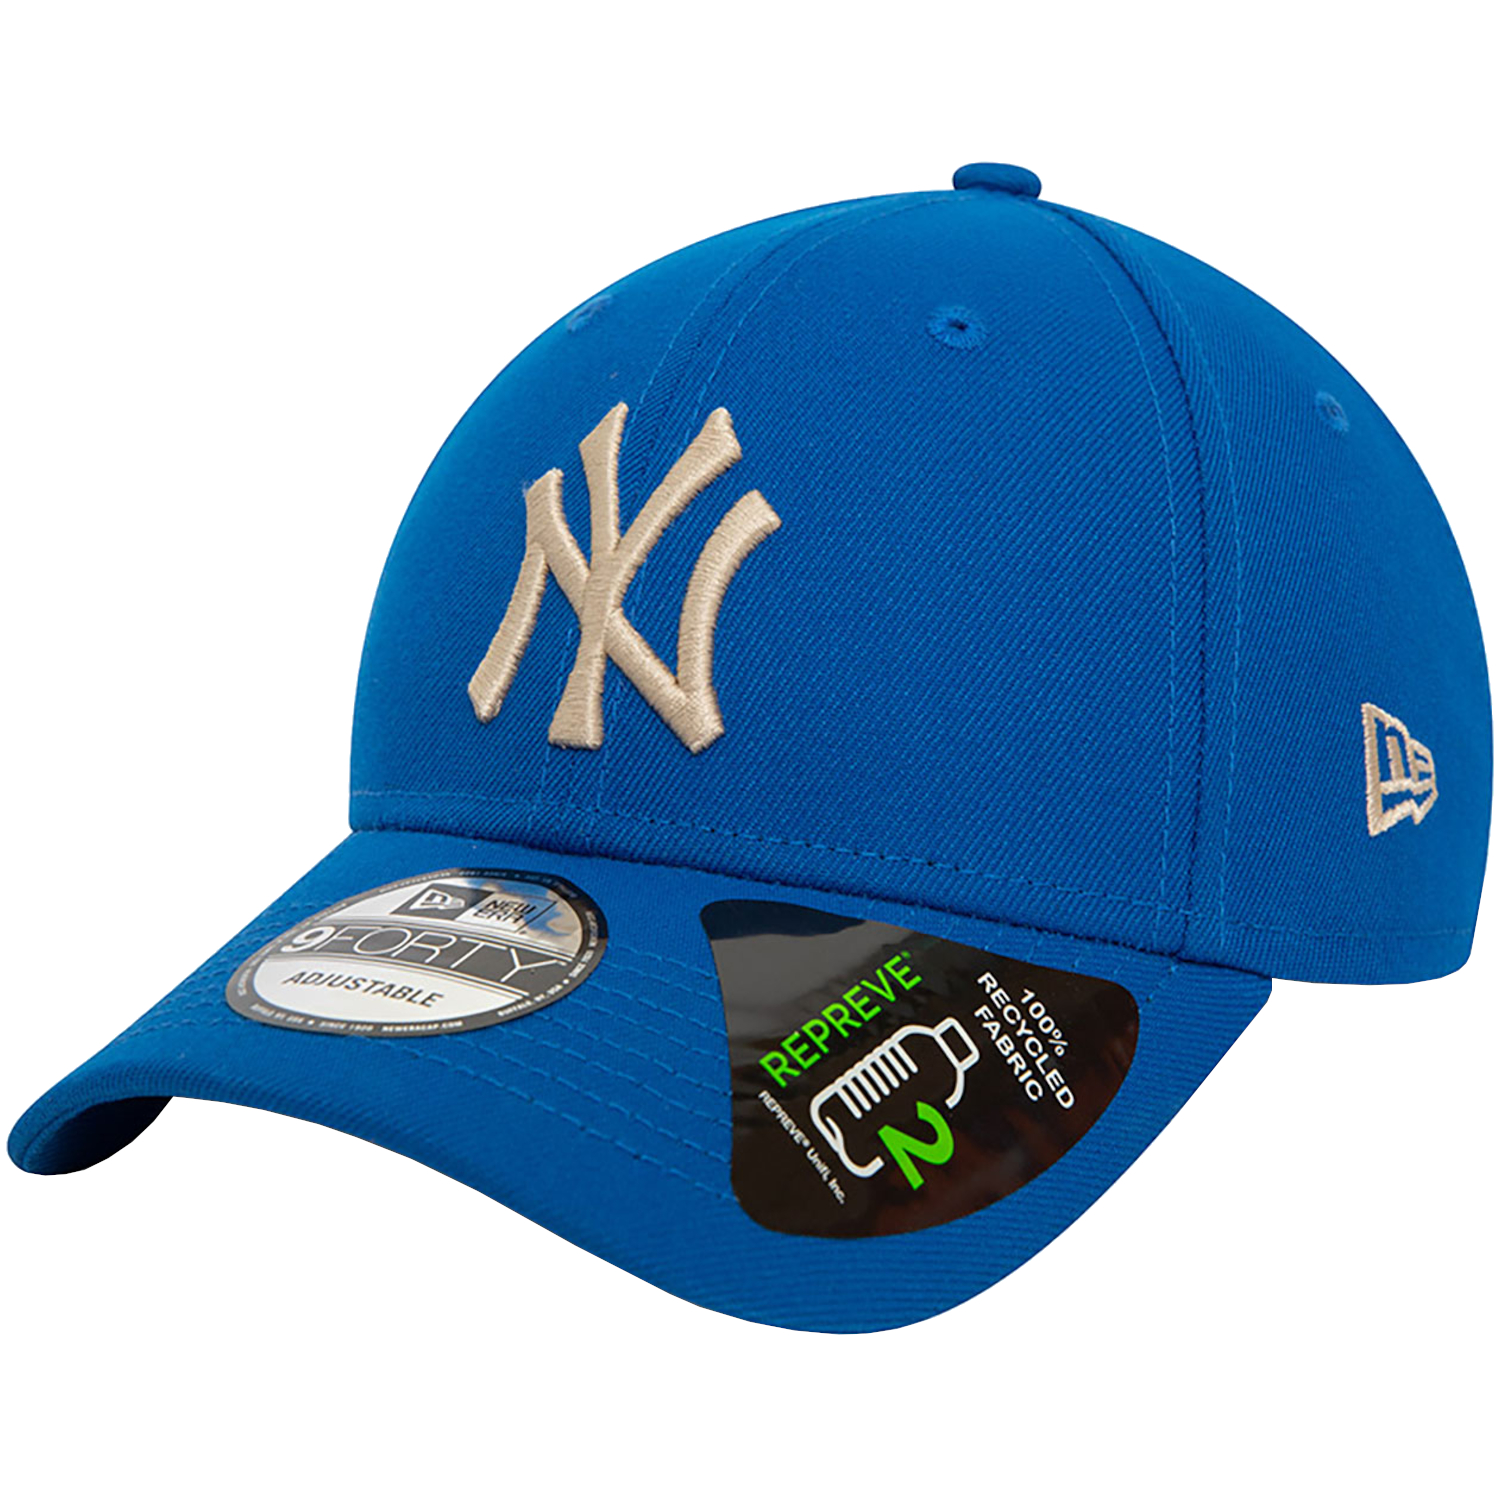 Бейсболка NEW ERA New Era Repreve 940 New York Yankees, синий